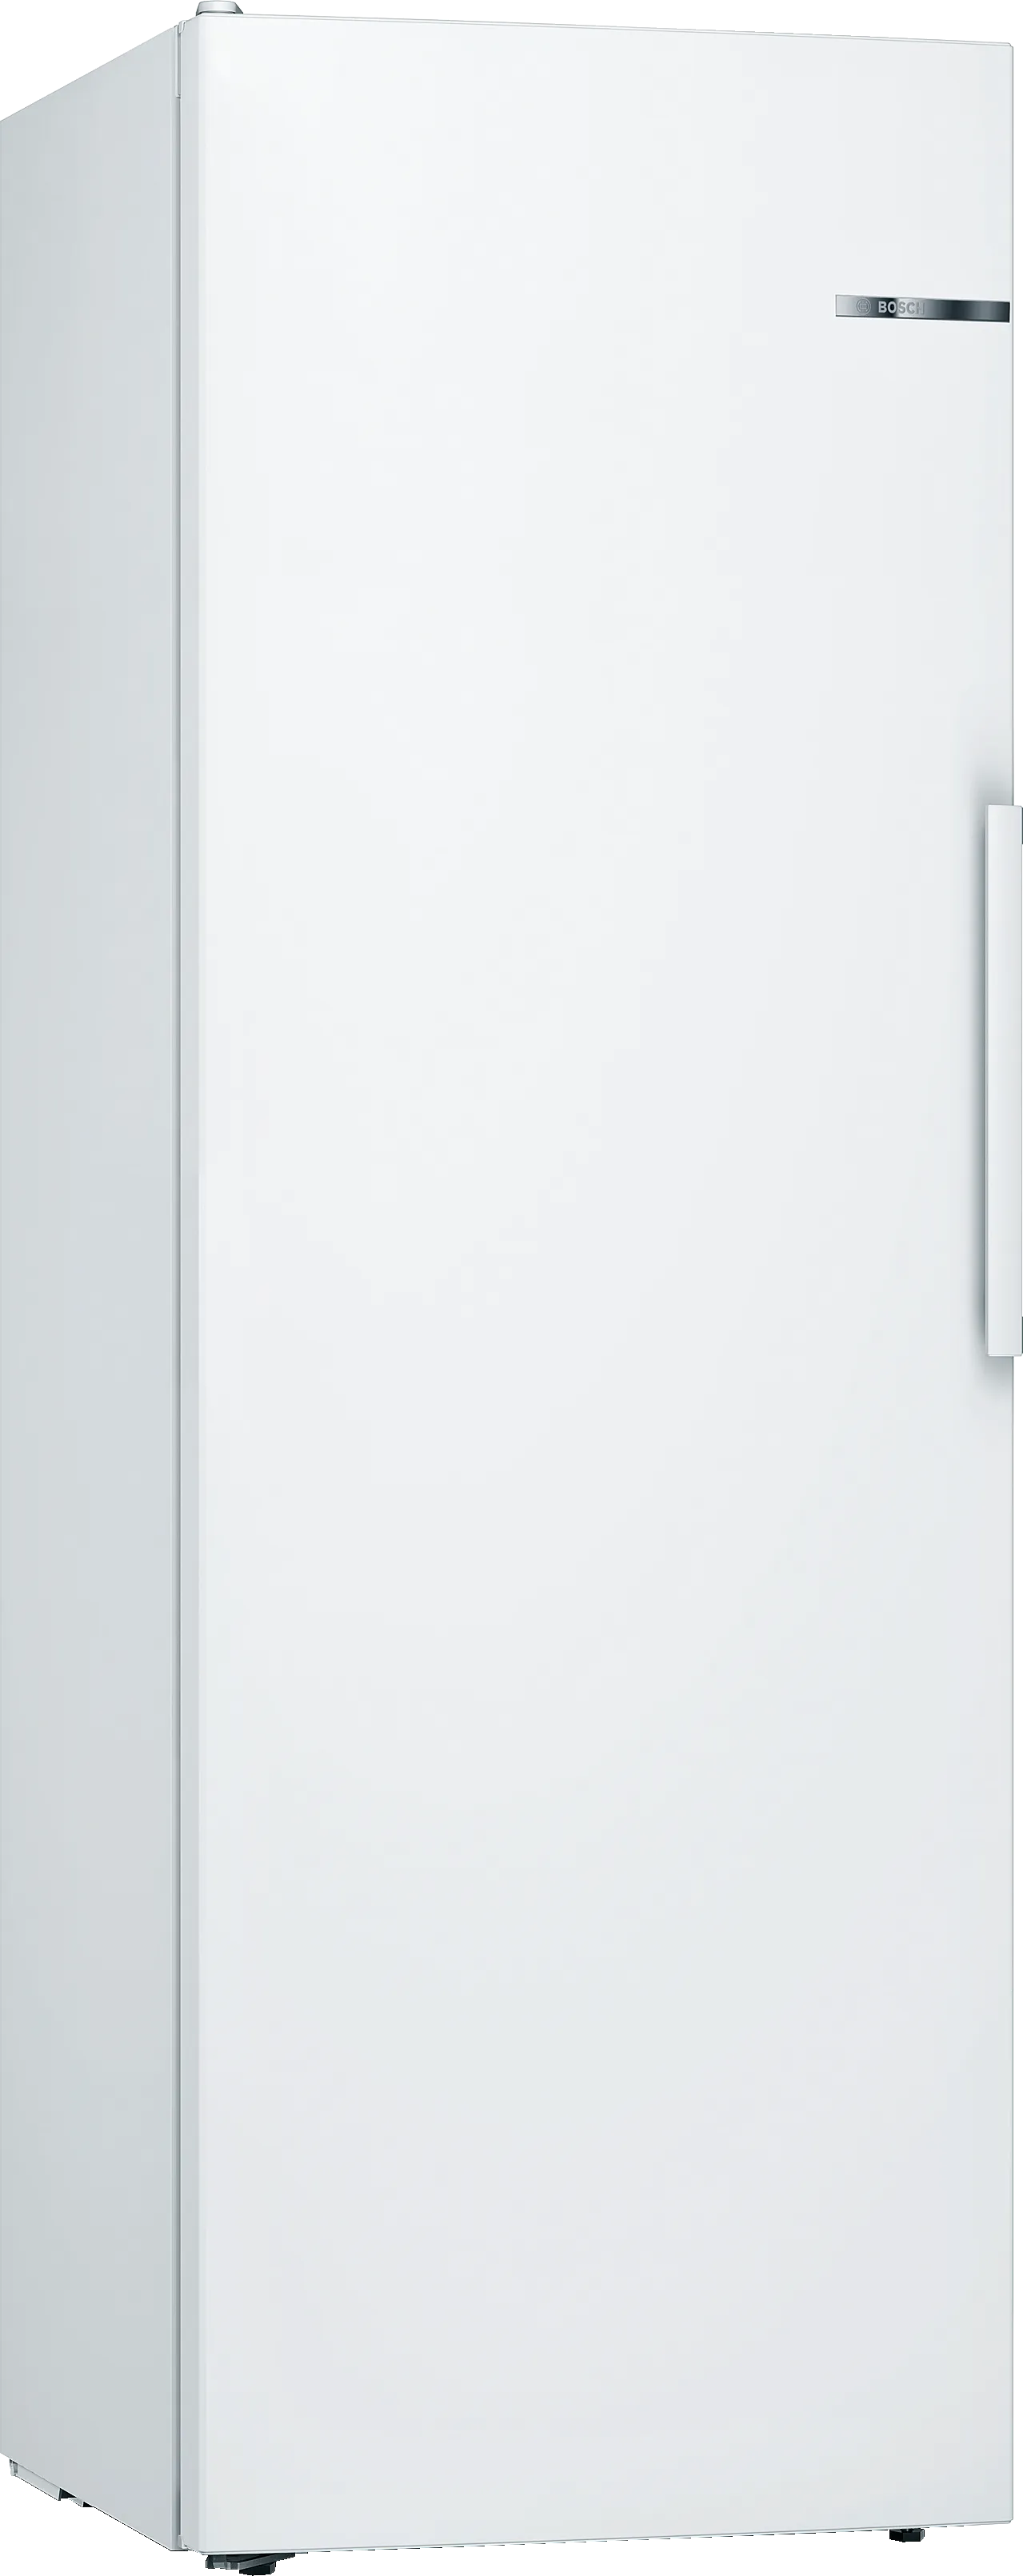 KSV33VWEP free-standing fridge